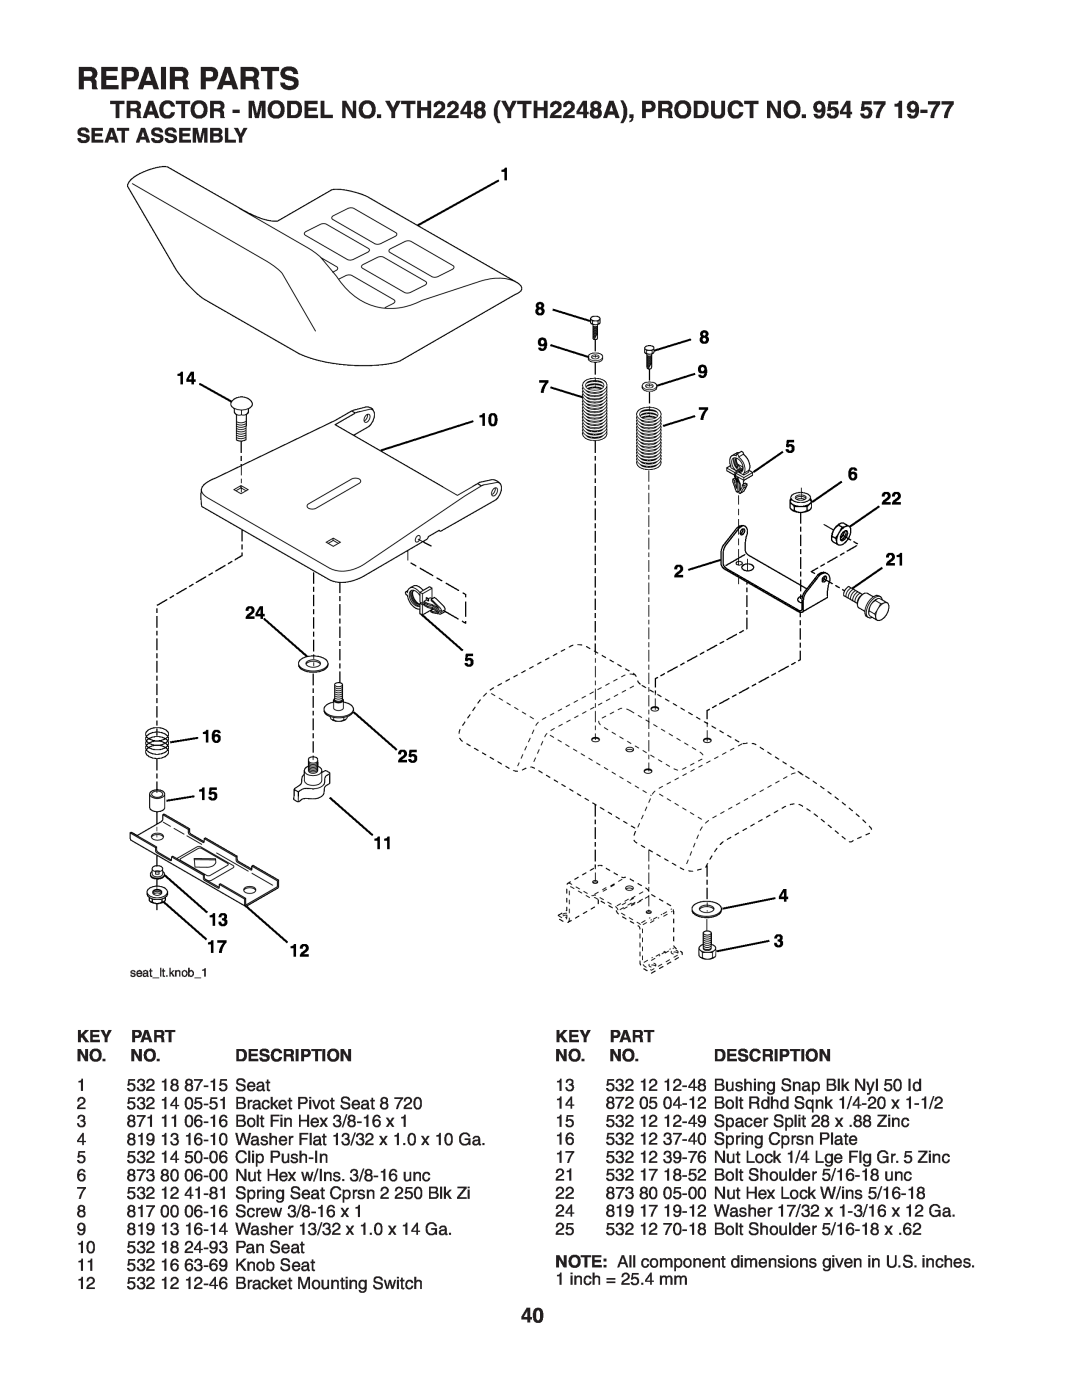 Husqvarna Seat Assembly, Repair Parts, TRACTOR - MODEL NO. YTH2248 YTH2248A, PRODUCT NO. 954 57, seatlt.knob1 